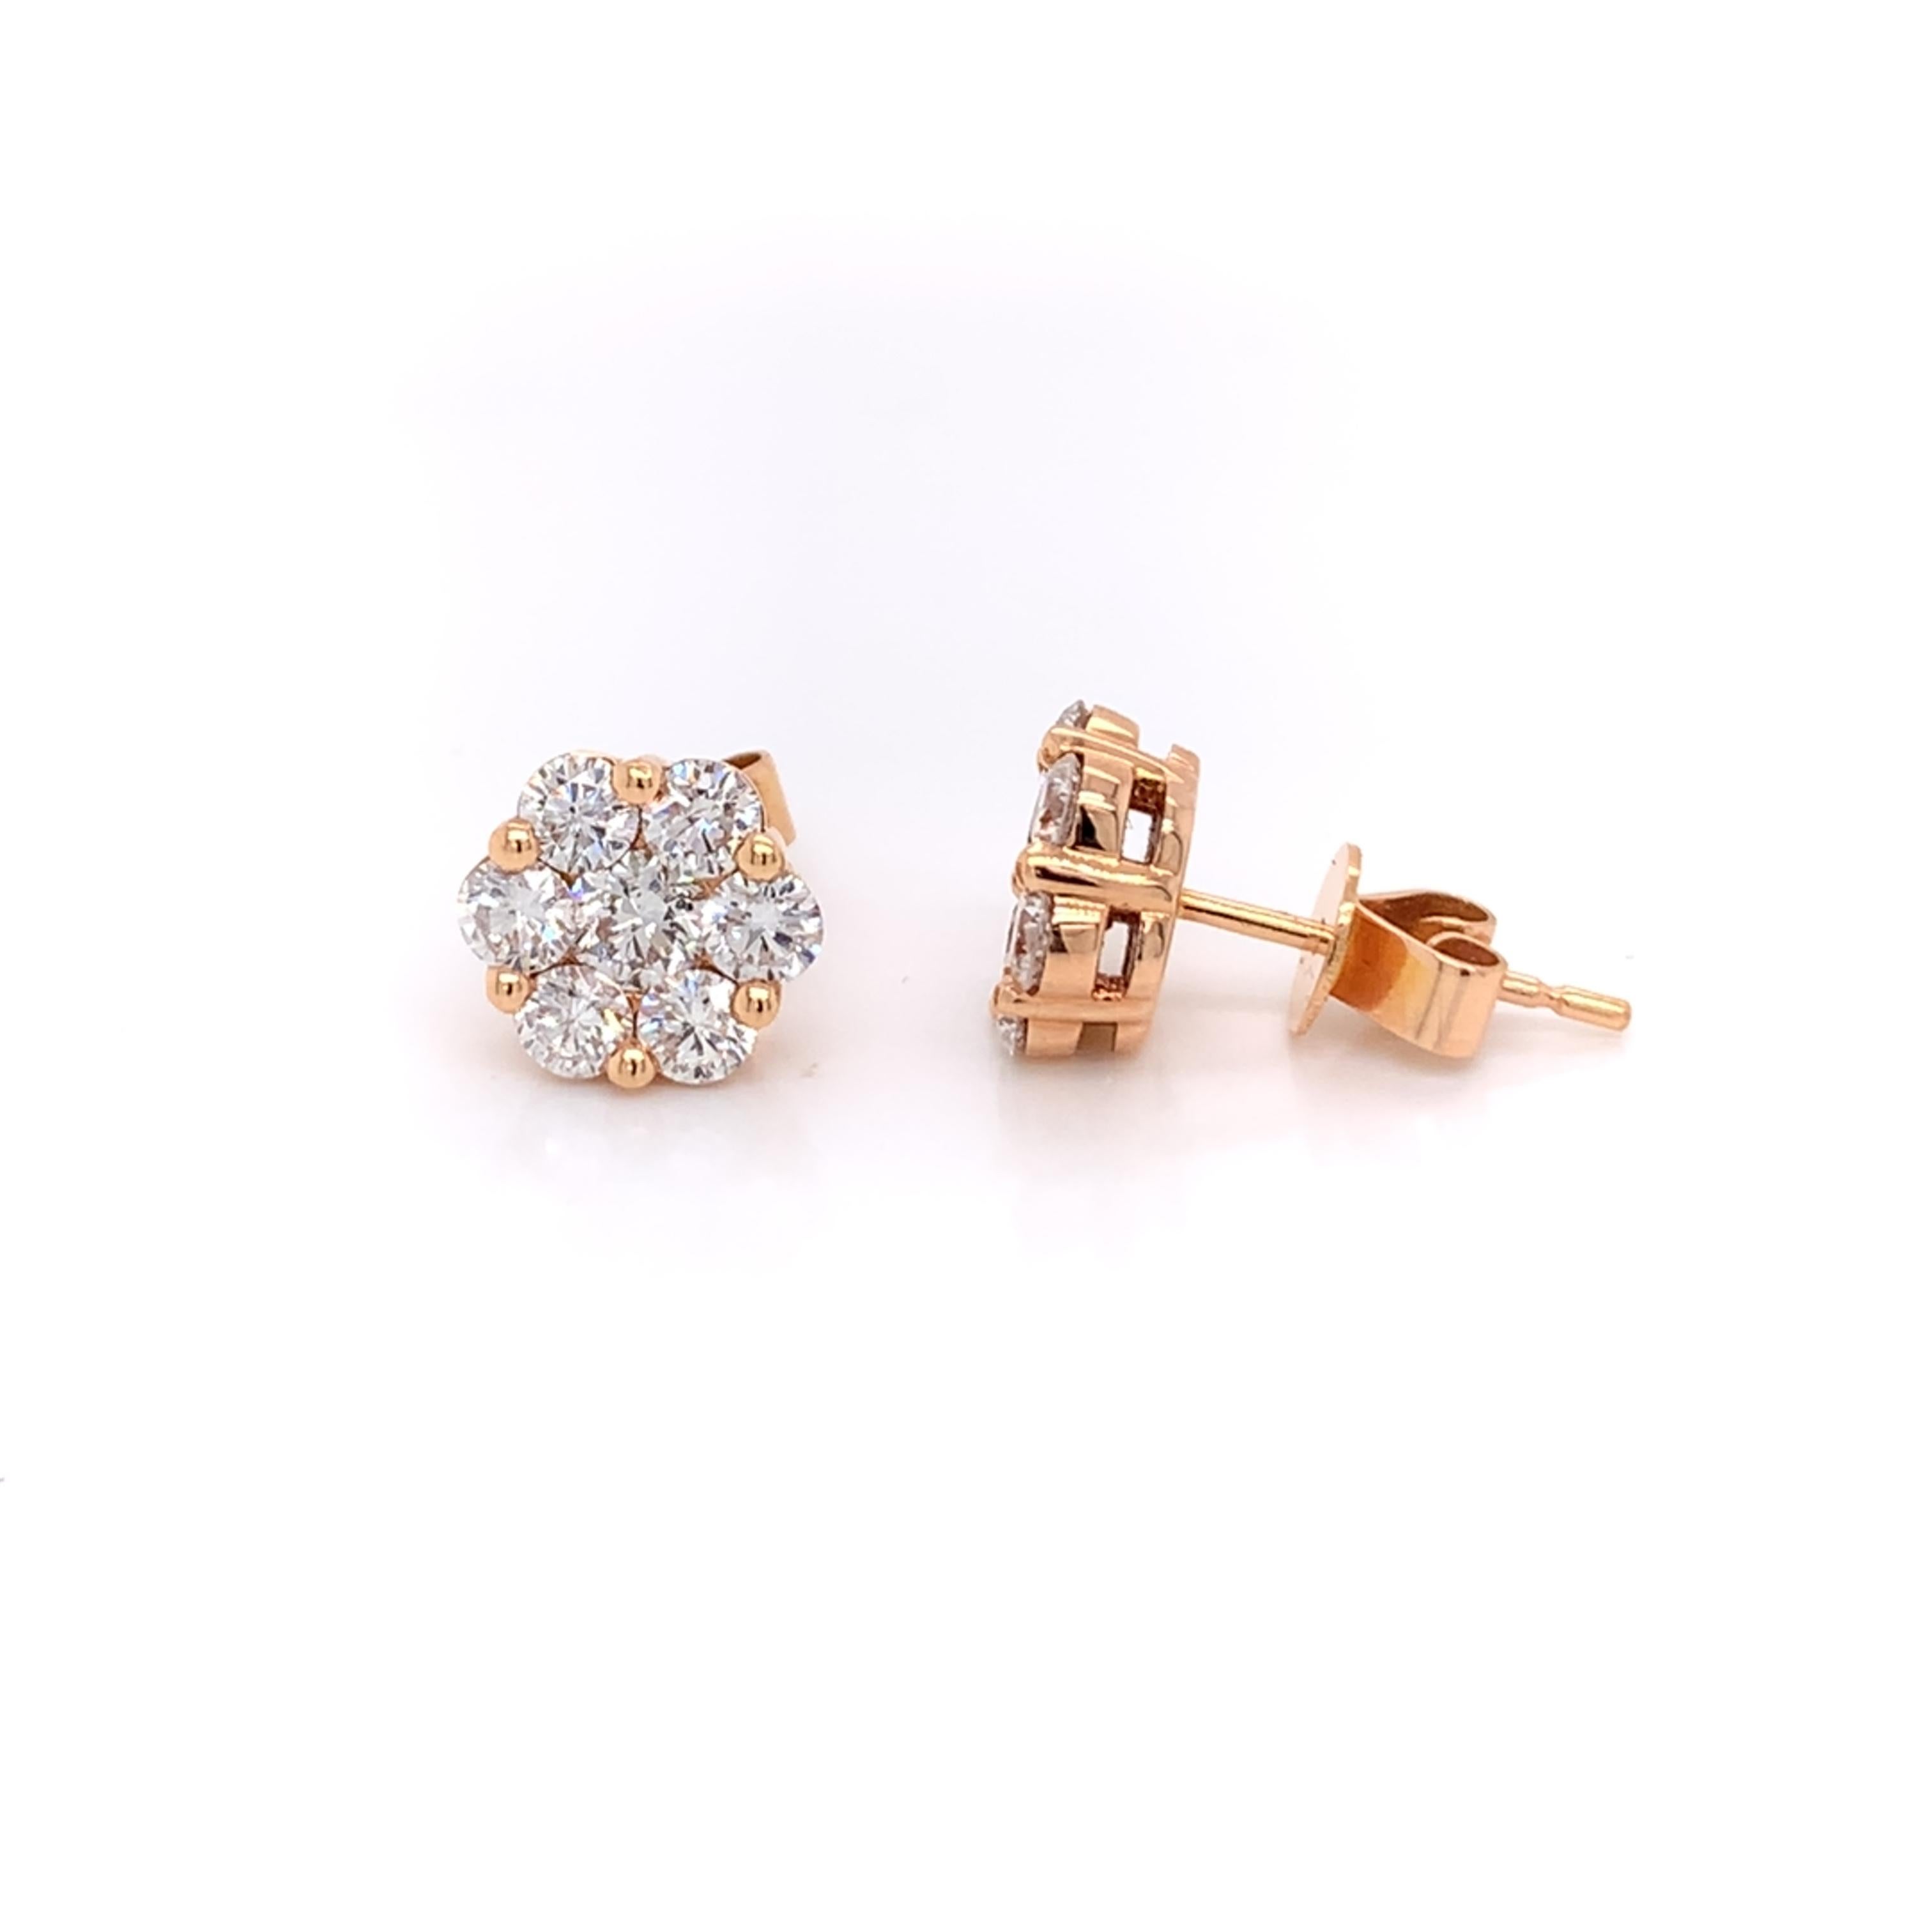 Rose shaped diamond stud earrings made with real/natural brilliant cut diamonds. Total Diamond Weight: 1.59 carats. Diamond Quantity: 14 round diamonds. Diamond Color: G-H. Clarity: VS. Mounted on 18 karat rose gold push-back setting